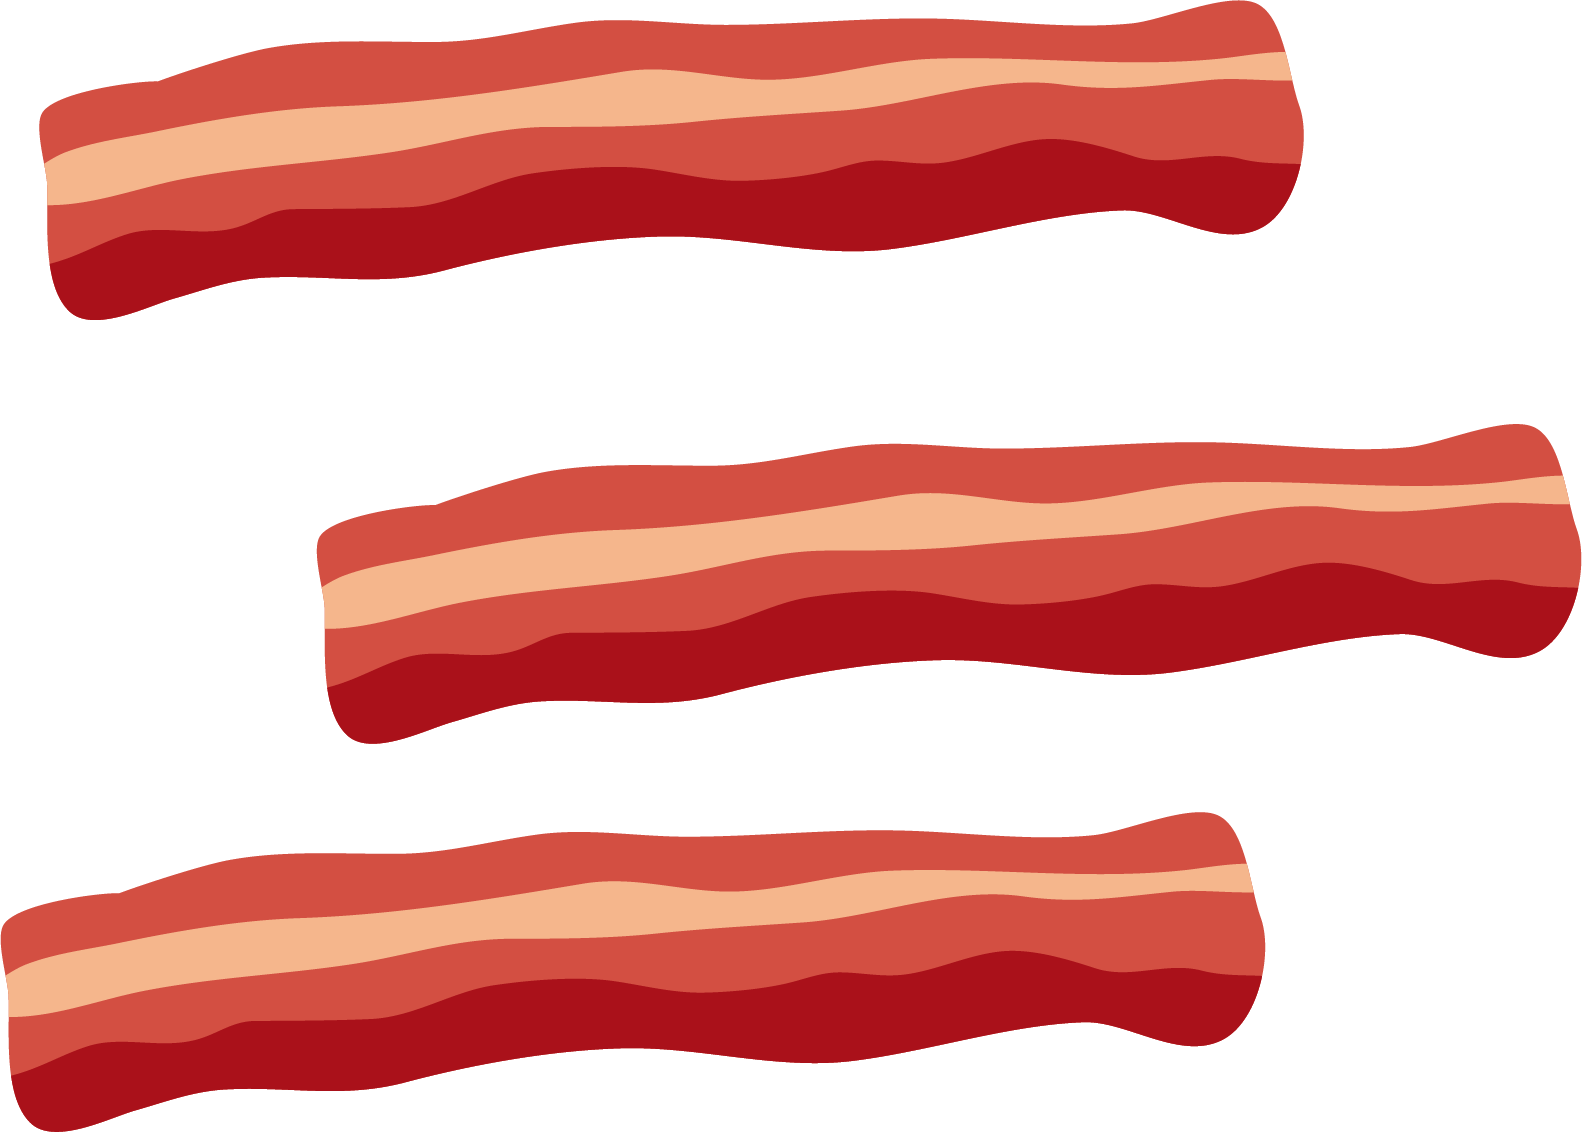 Sizzling Bacon Strips Illustration